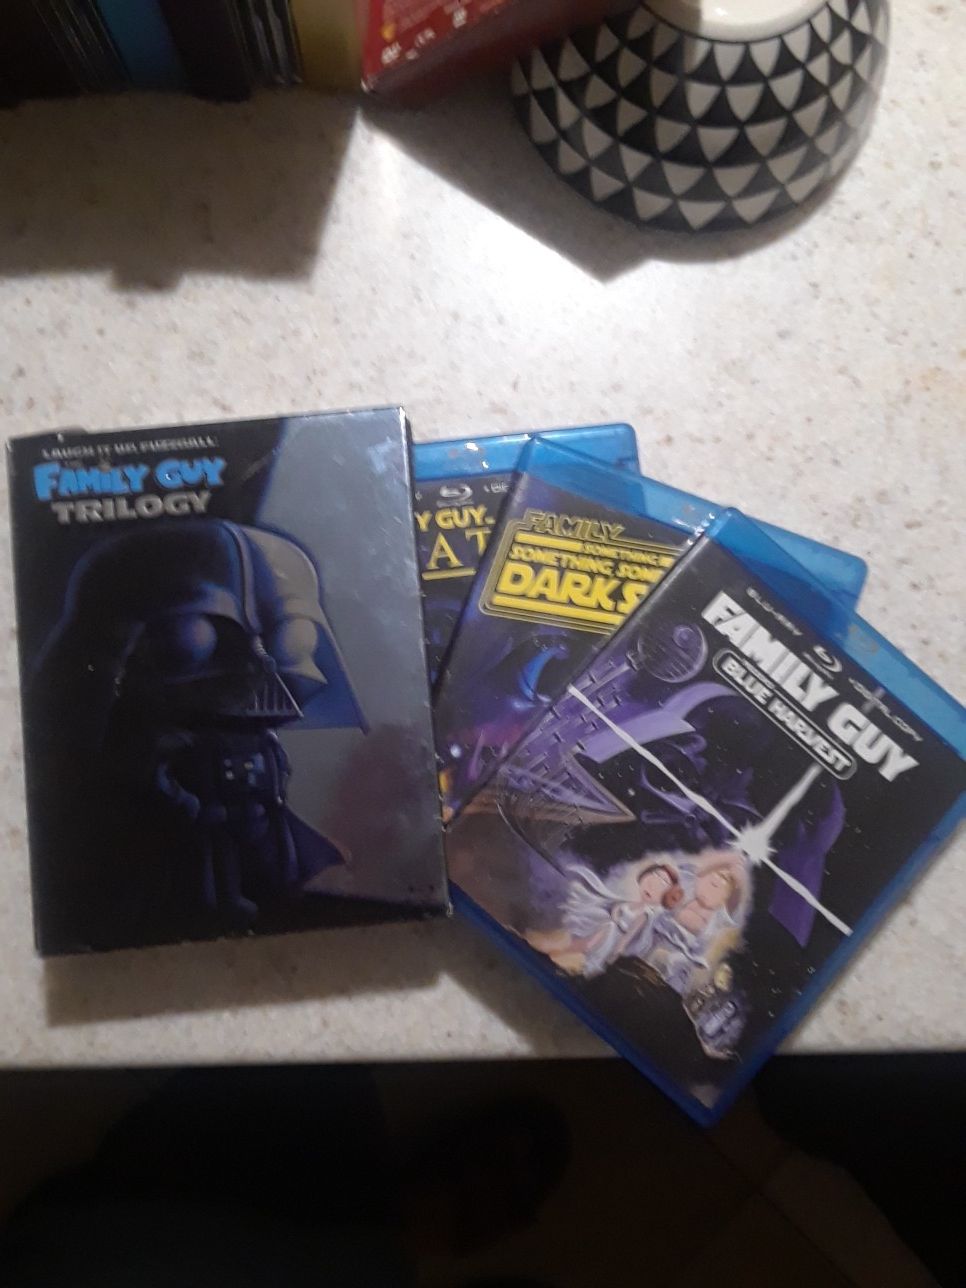 Family guy trilogy,laugh it up fuzzball DVD set